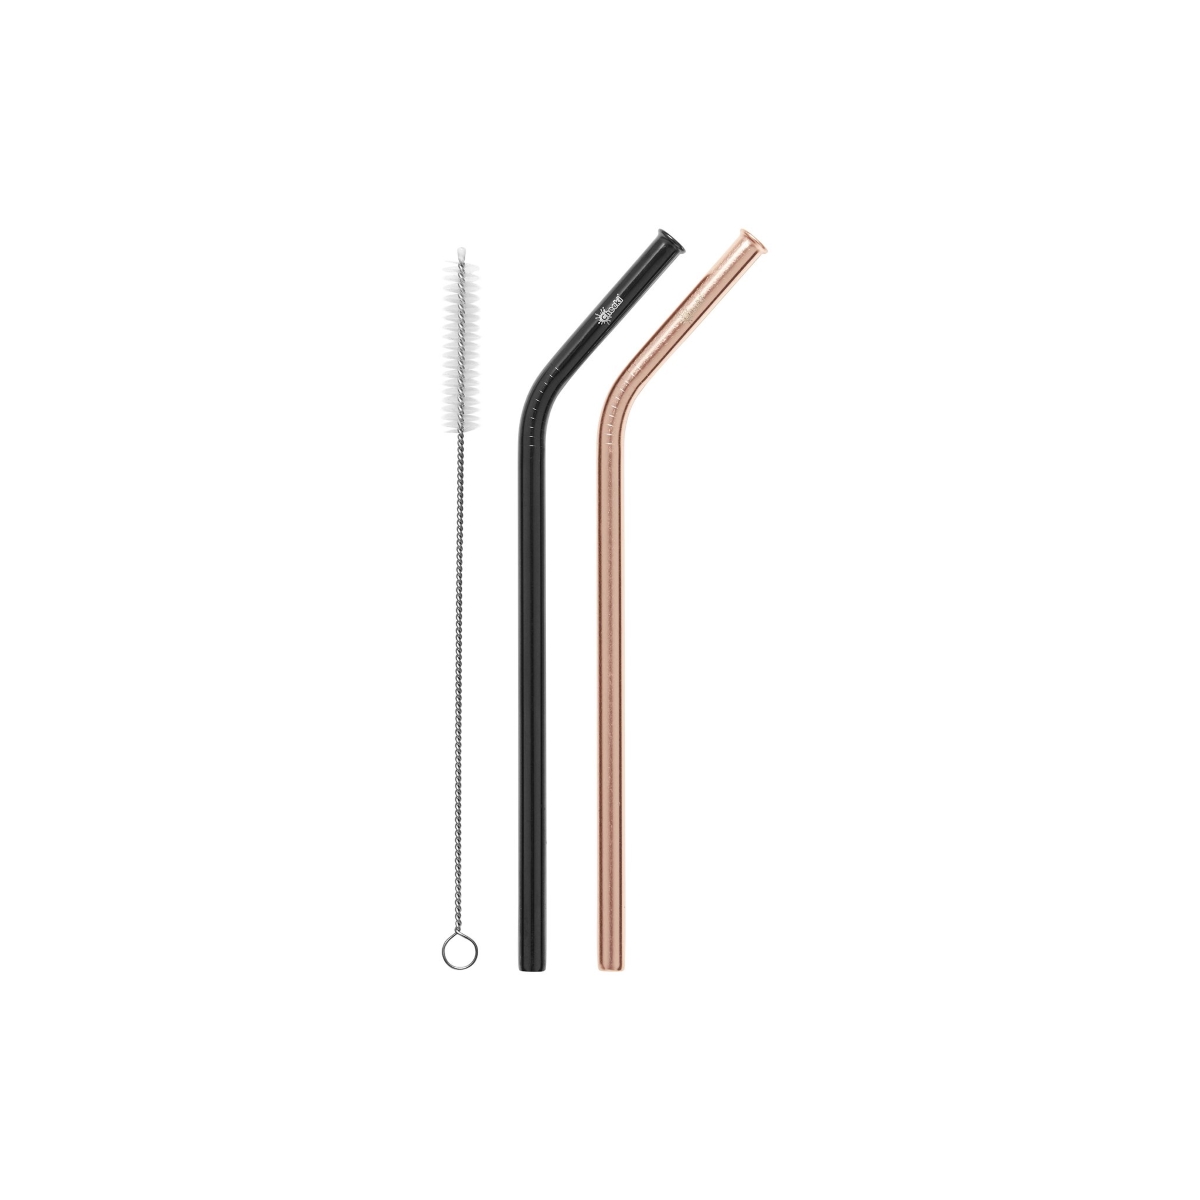 Cheeki 2 Pack Bent Stainless Steel Straws - Rose Gold, Black & Cleaning Brush